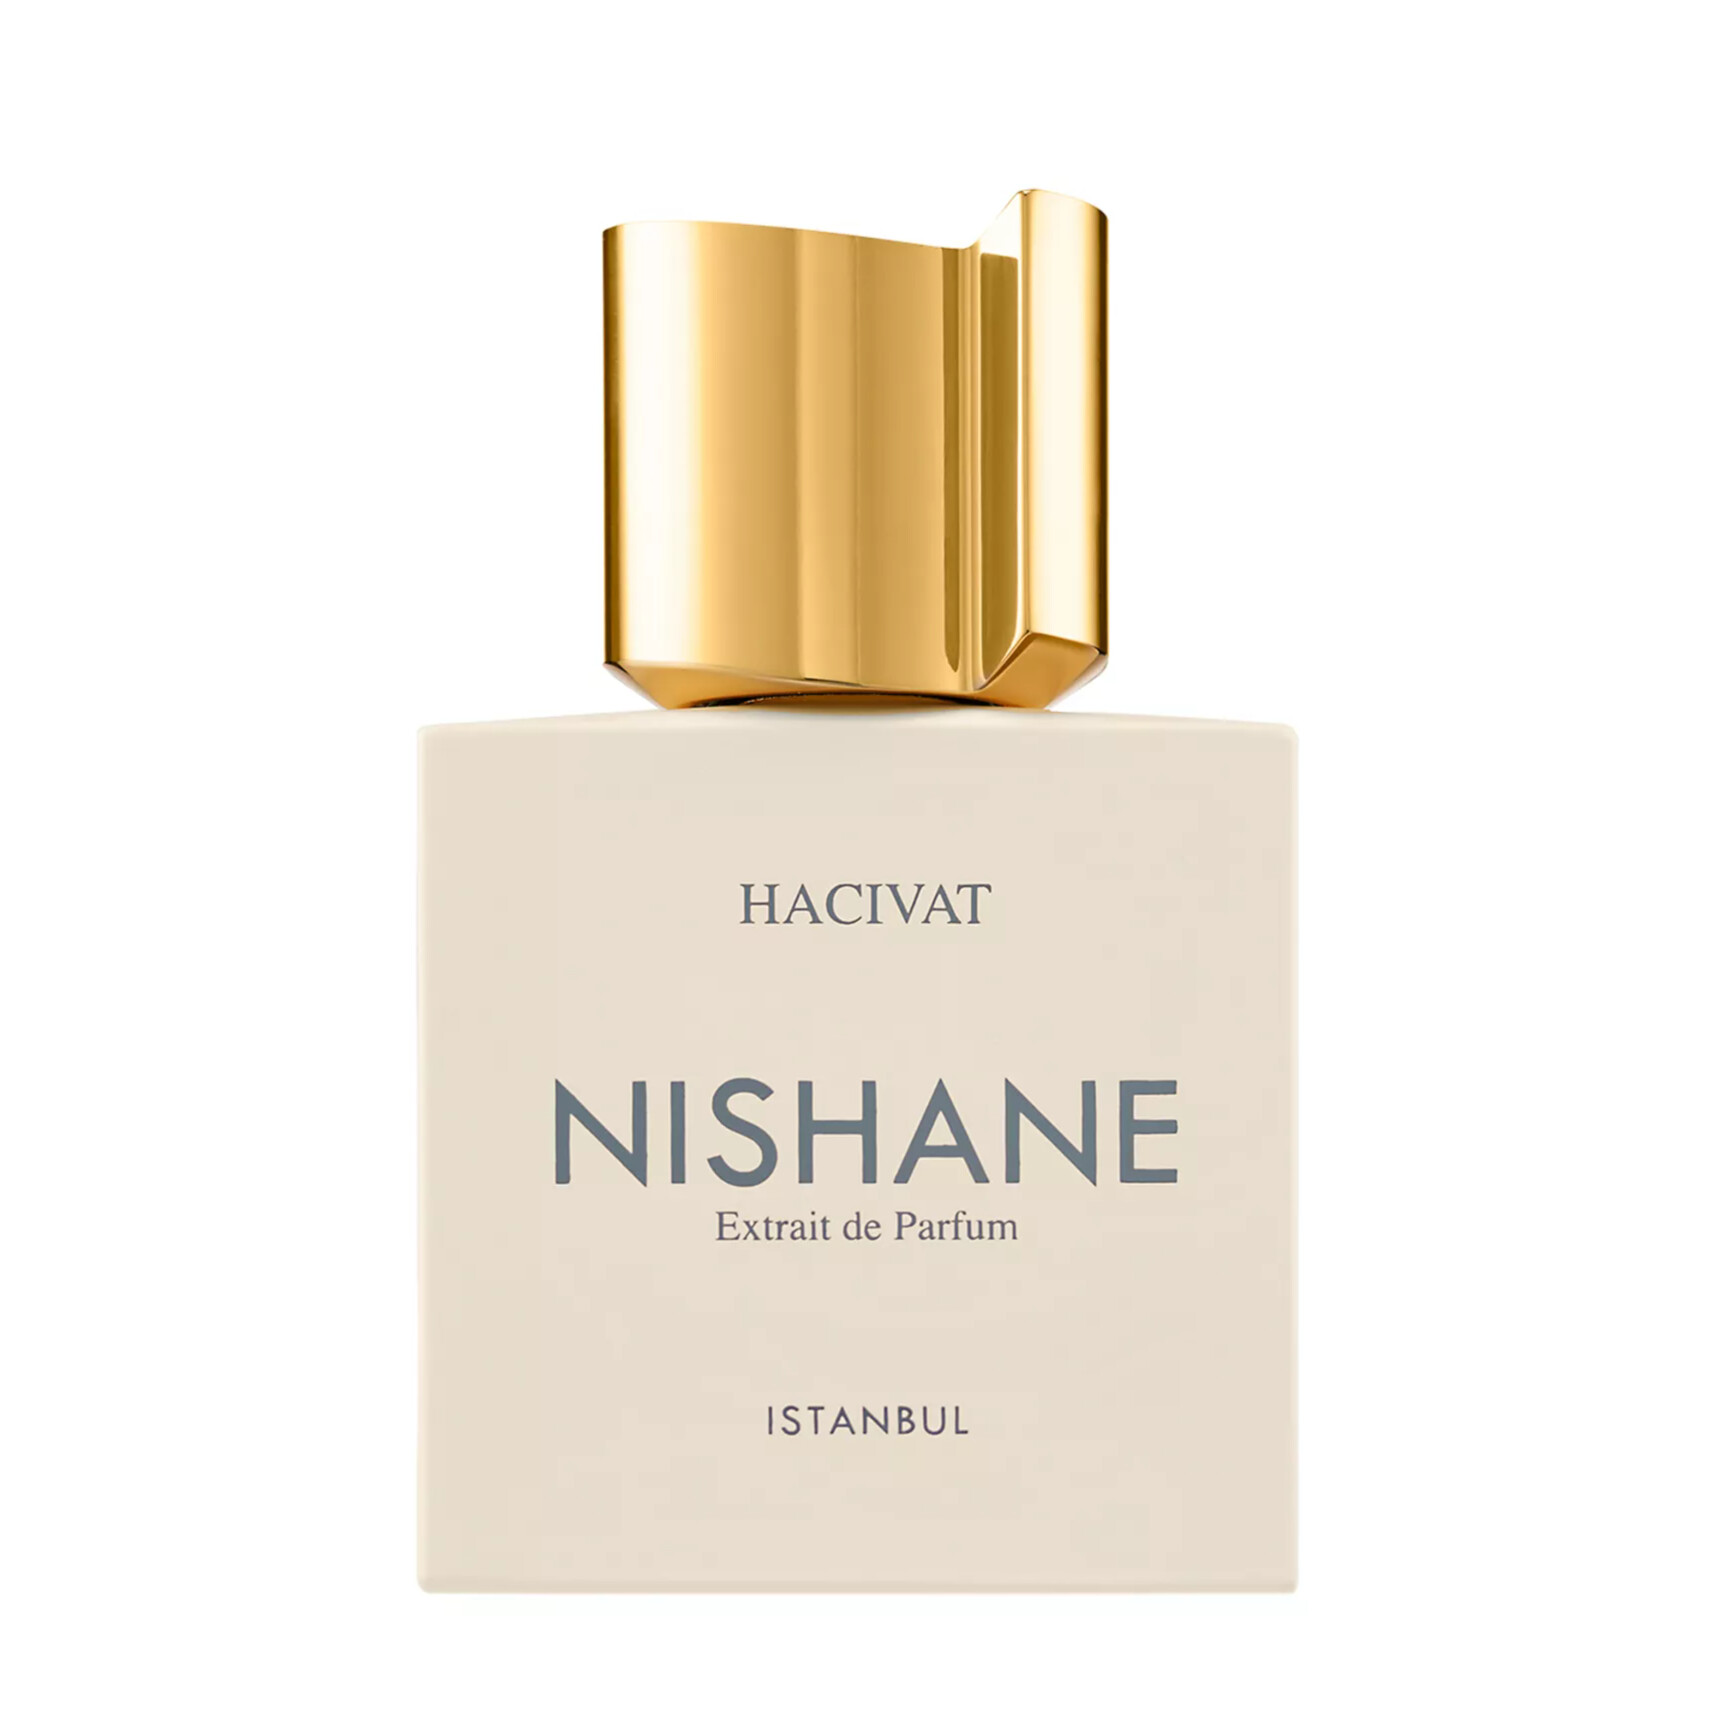 NISHANE Hacivat Extrait de Parfum 50ml